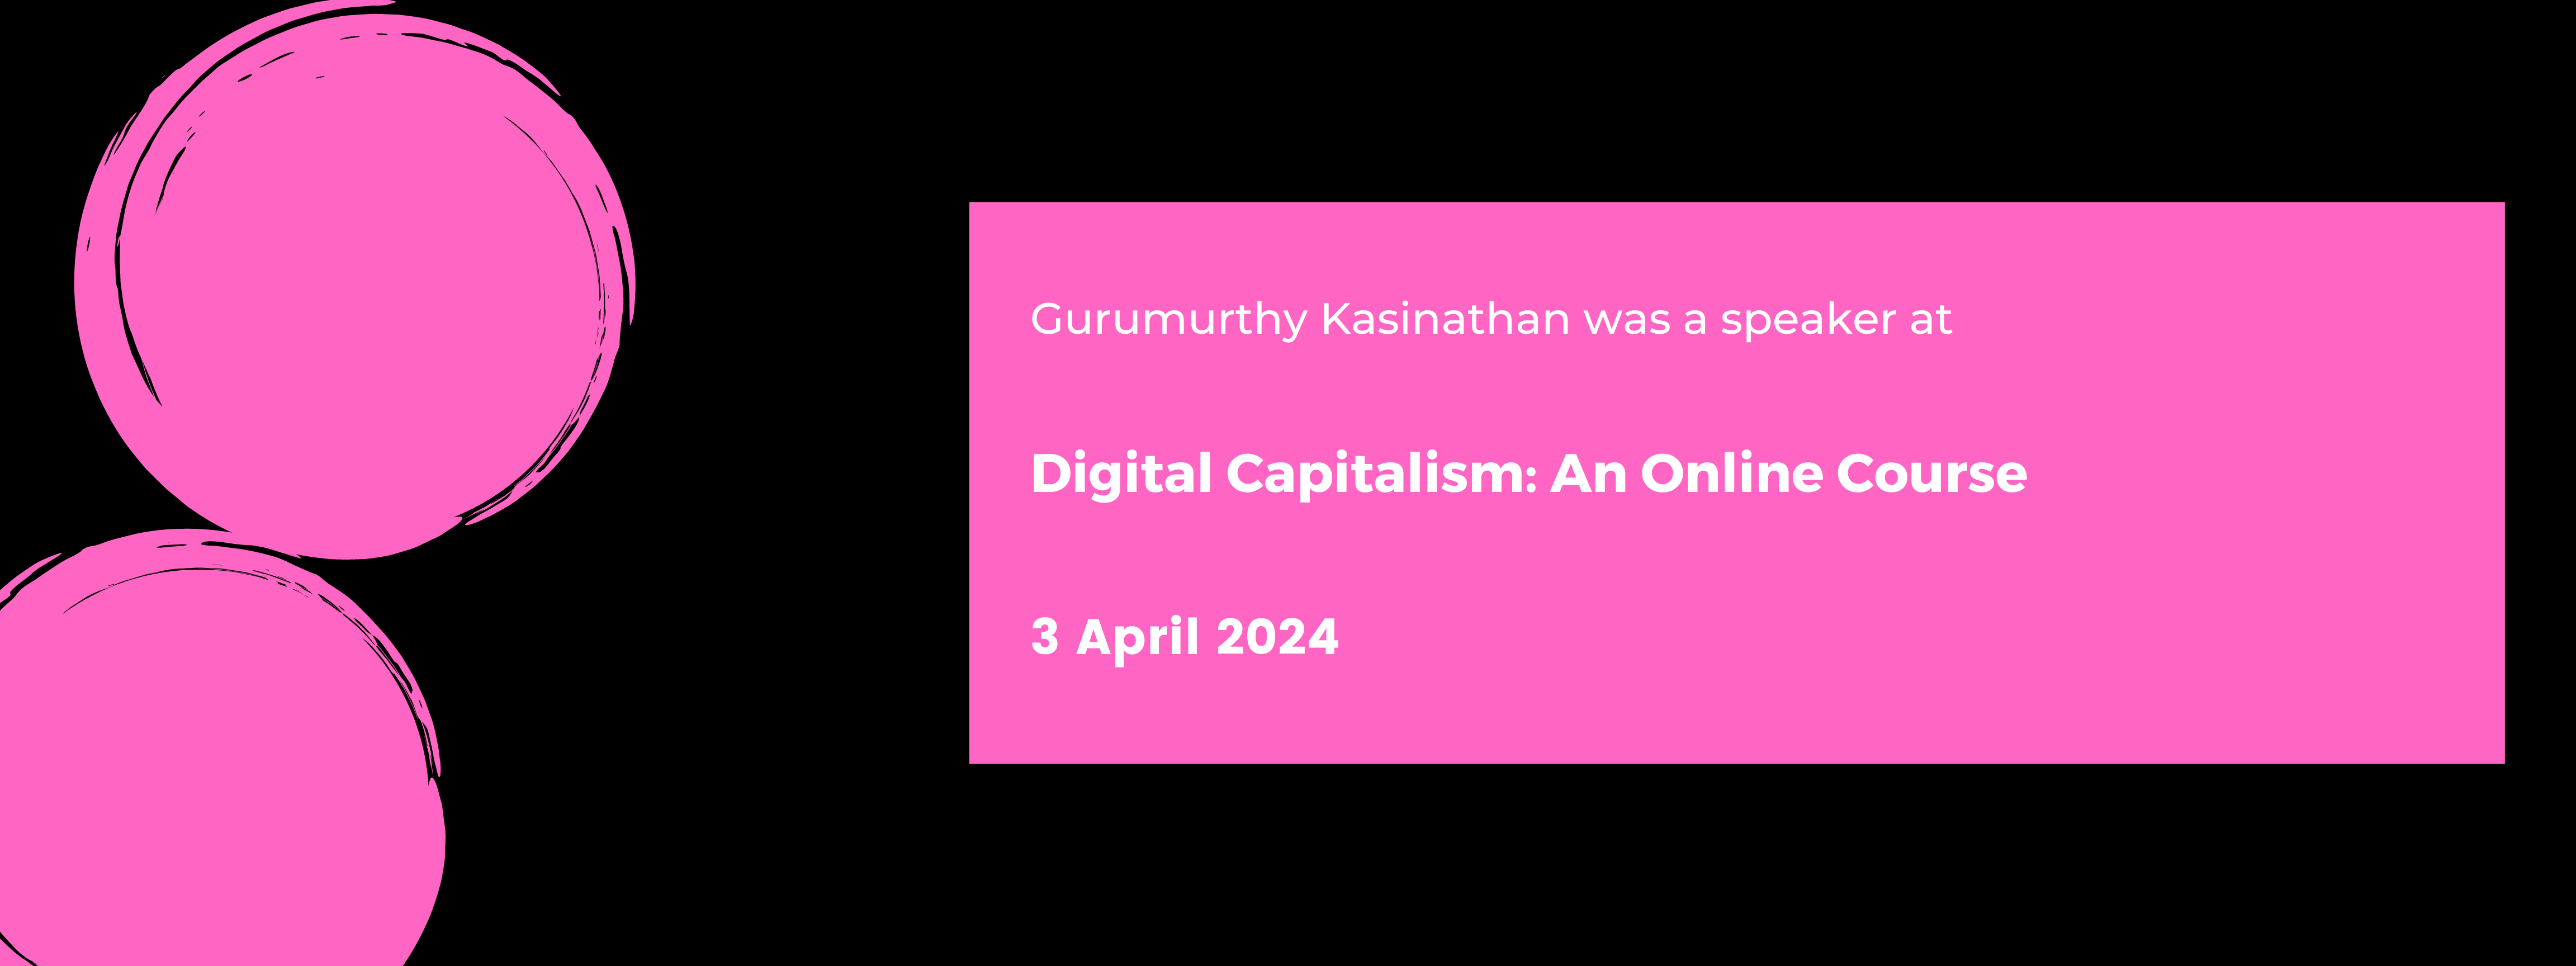 Digital Capitalism: An Online Course